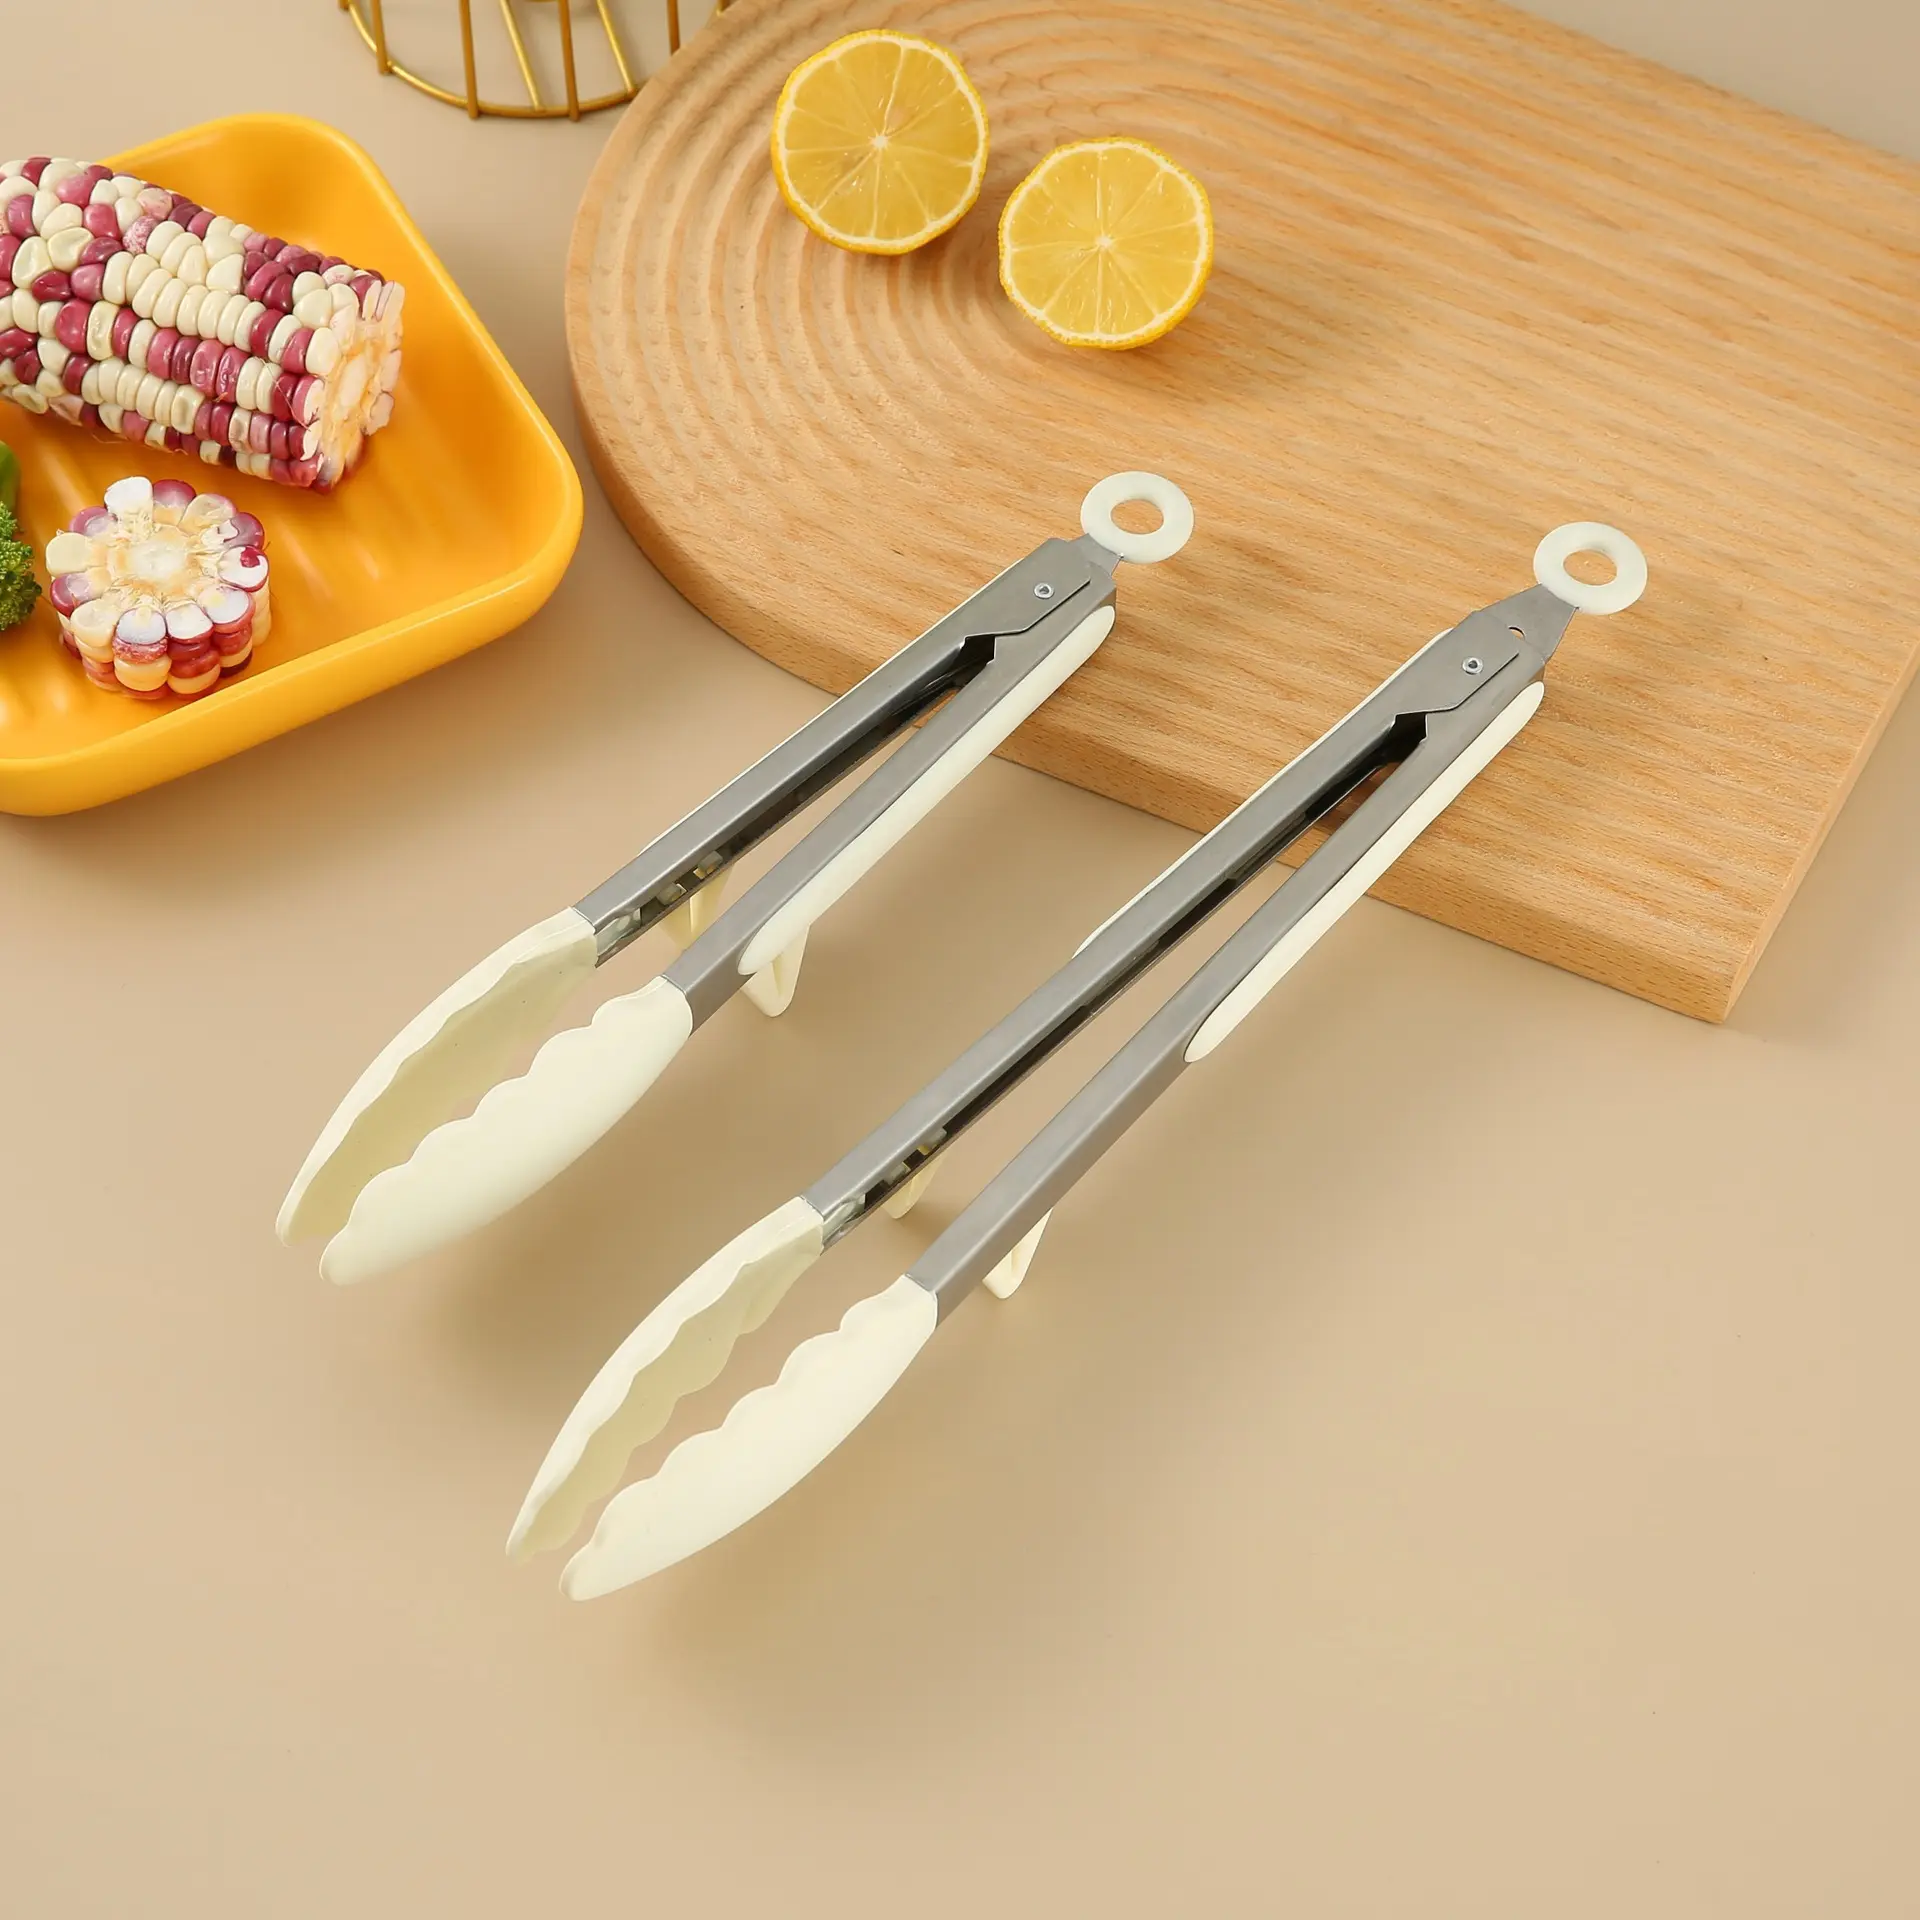 Premium quality anti slip stainless steel handle locking kitchen tongs silicone food tongs